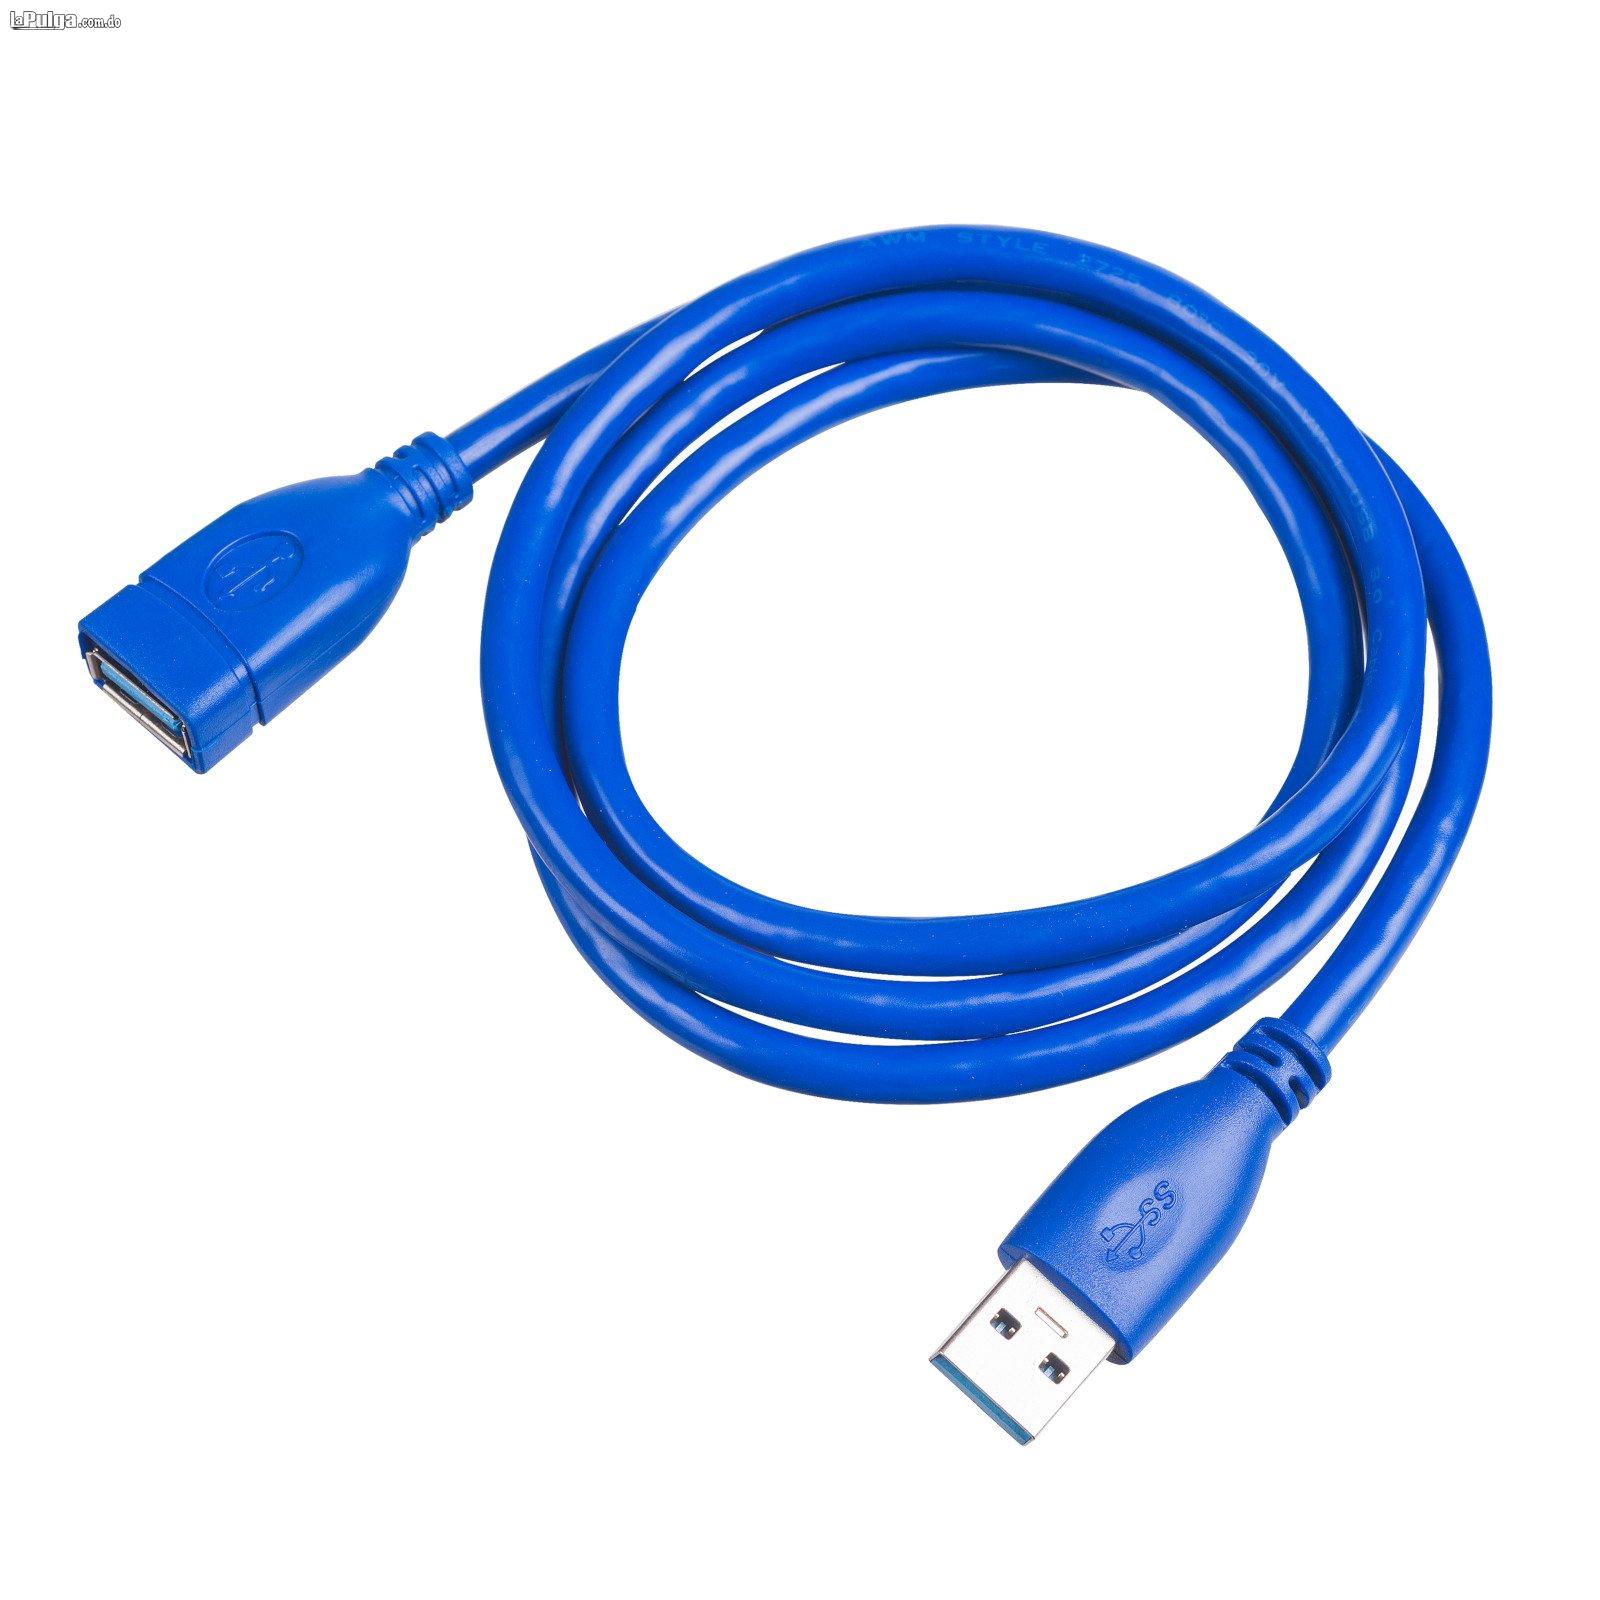 UE3.0-1M, Cable de extensión USB 3.0, enchufes macho + hembra, 1 metro